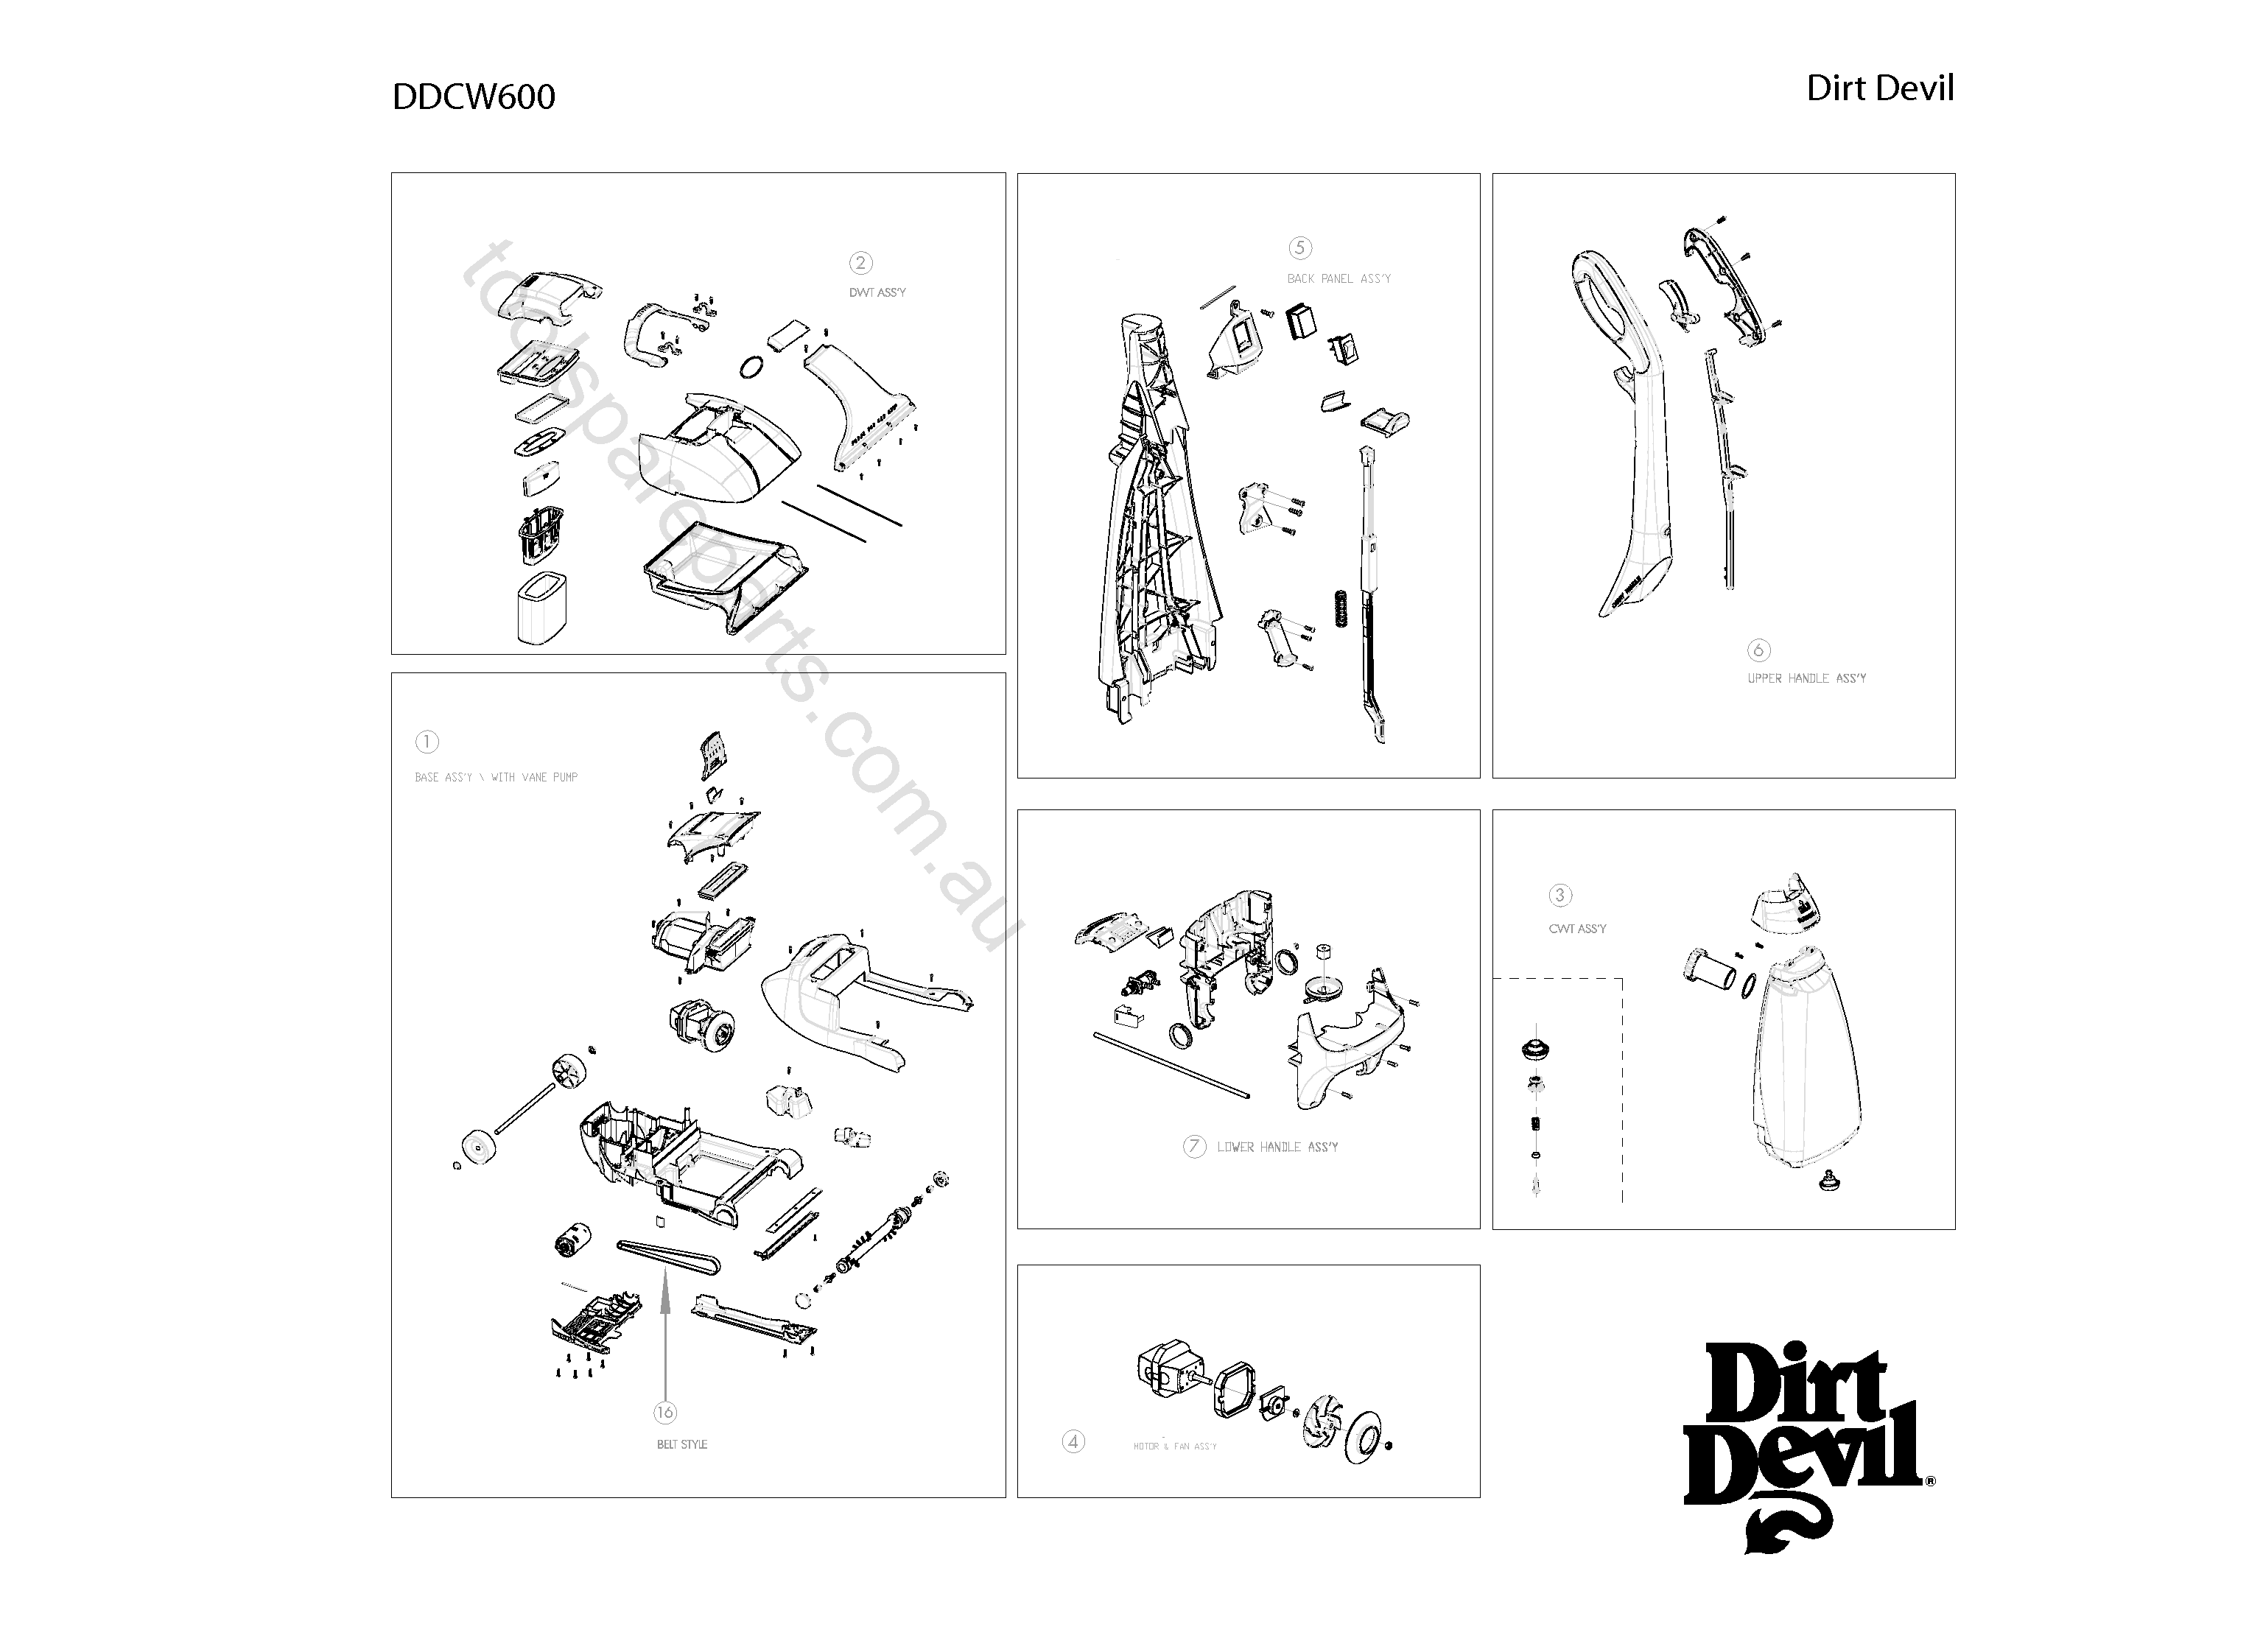 Dirt Devil DDCW600  Diagram 1